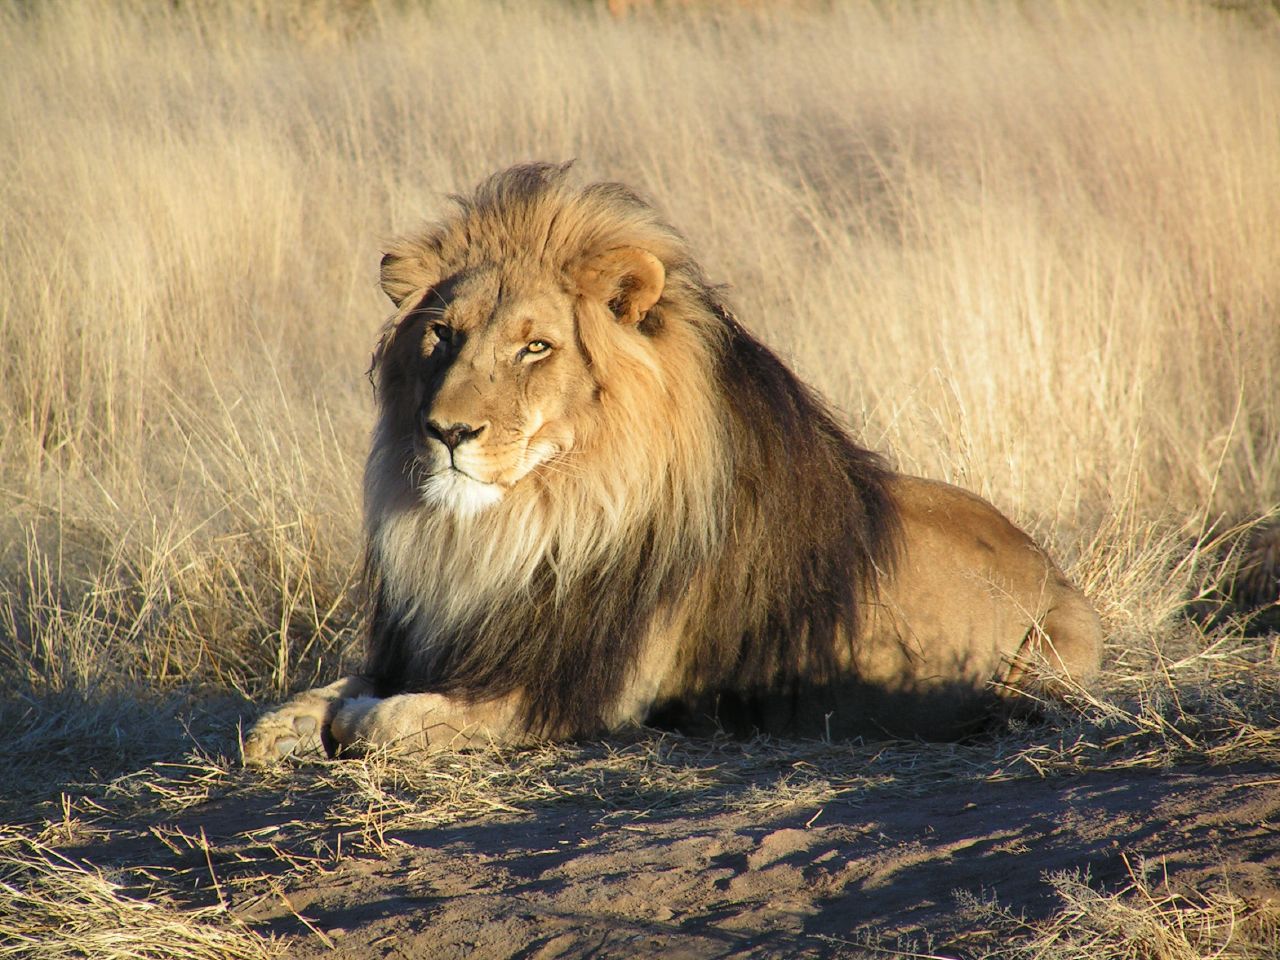 http://bundamahes.files.wordpress.com/2011/04/lion-waiting-in-nambia.jpg